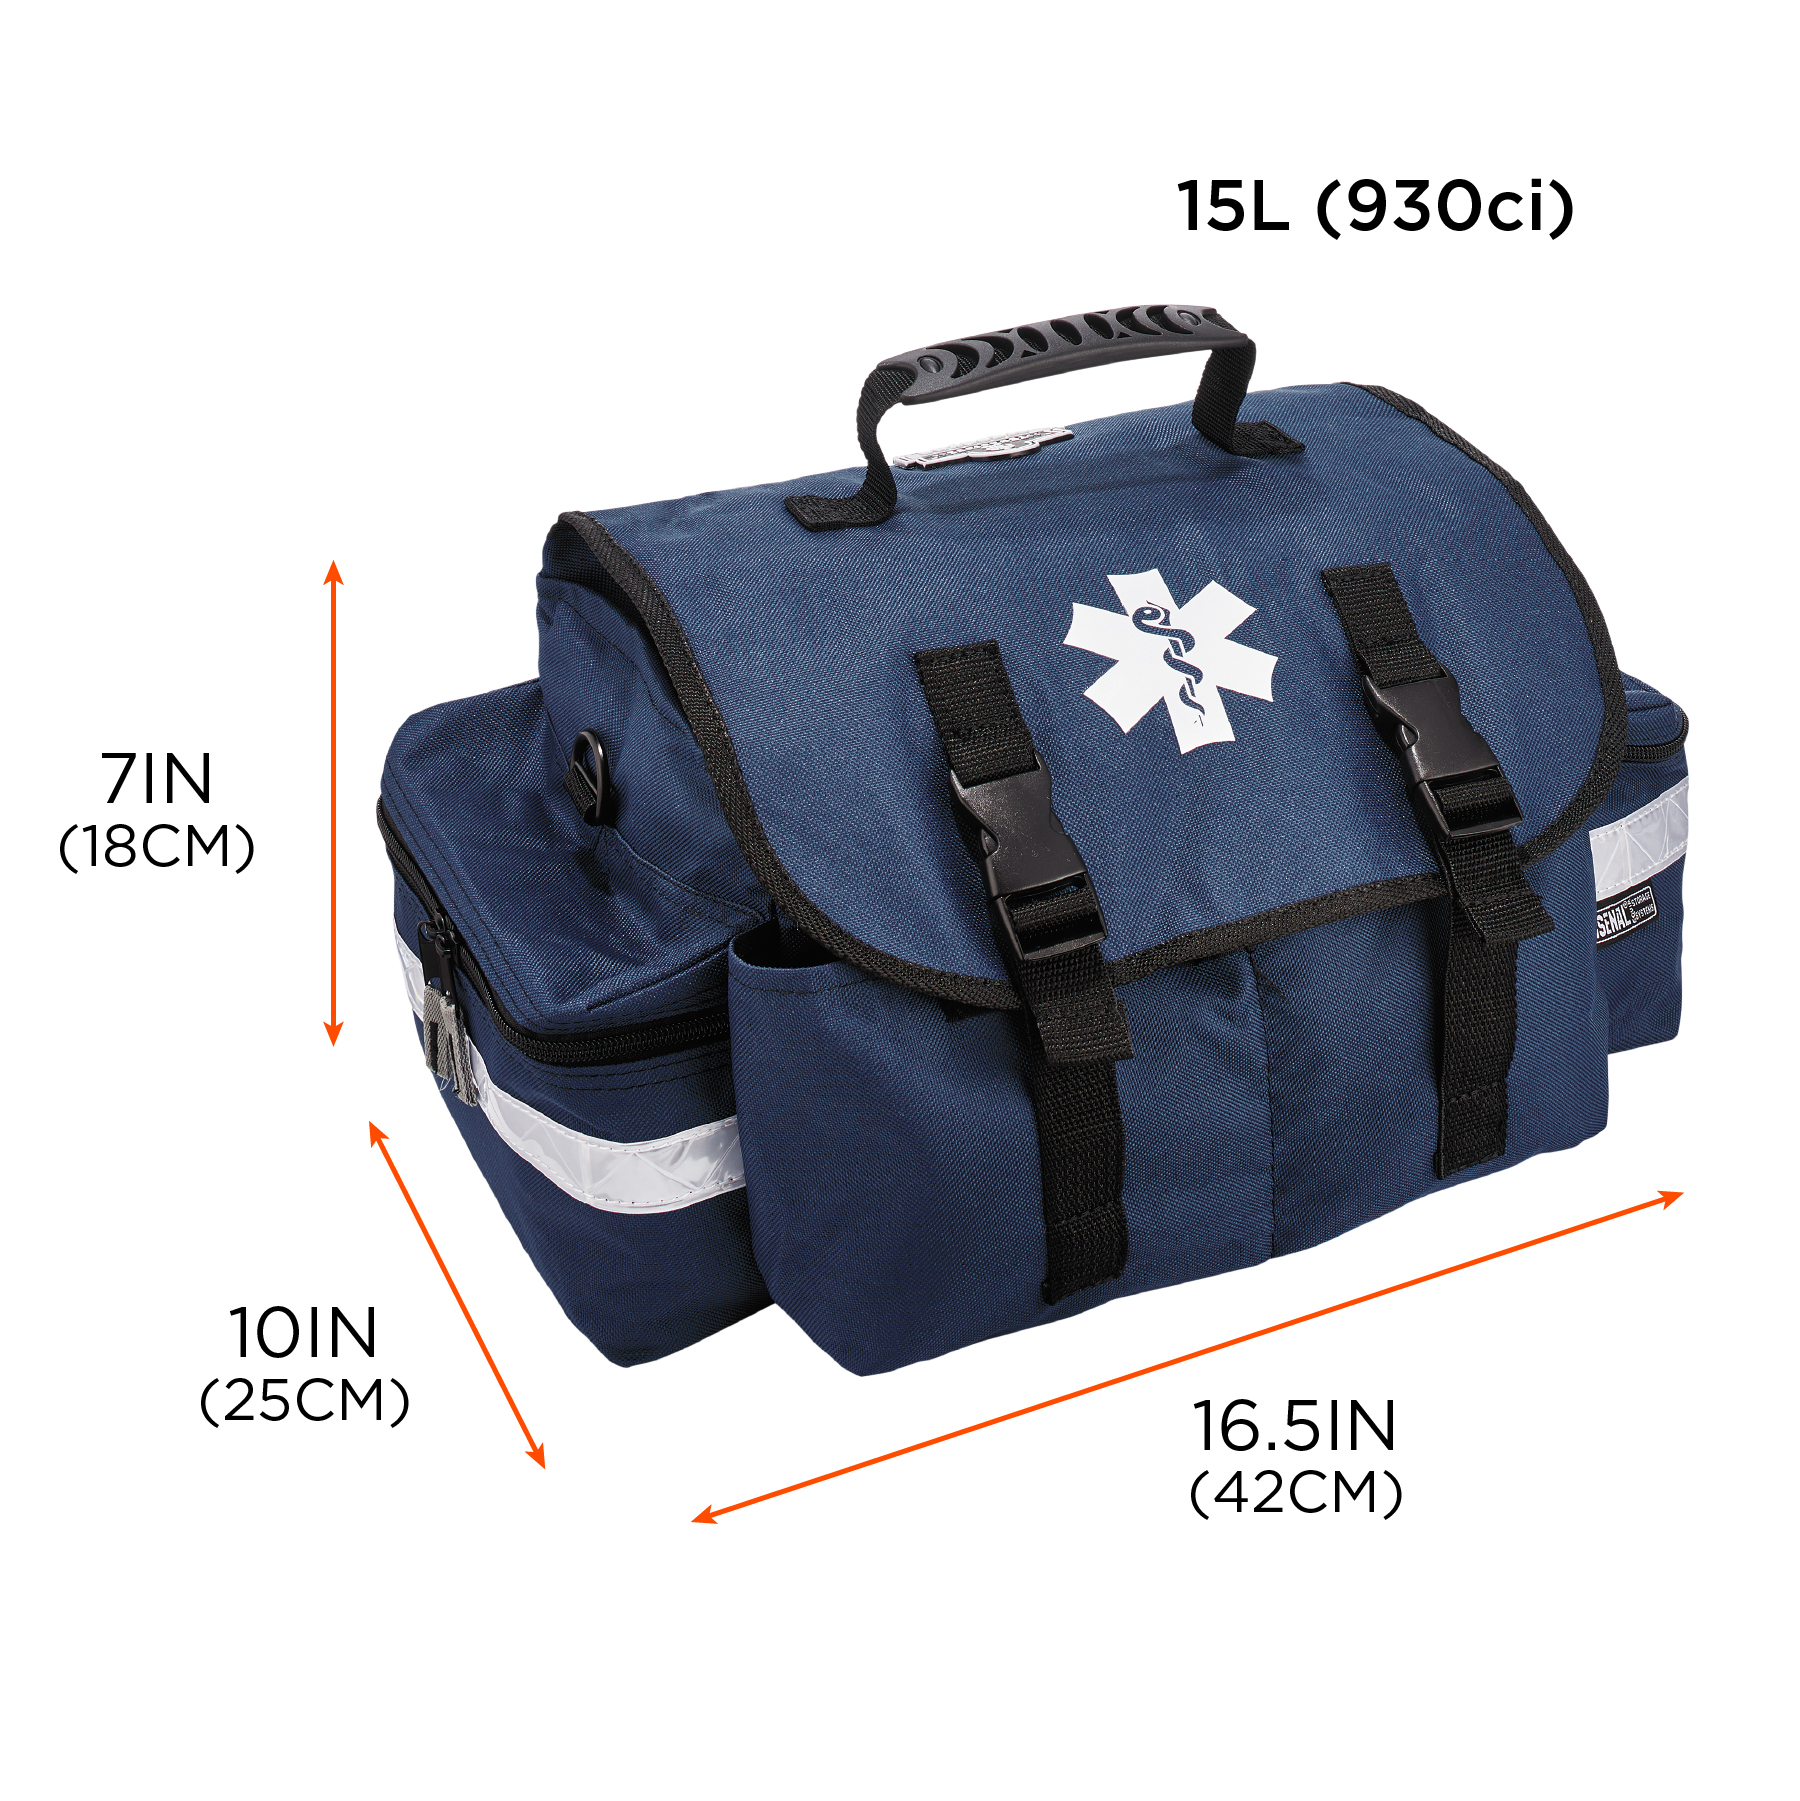 First Responder EMS Jump Bag - 15L